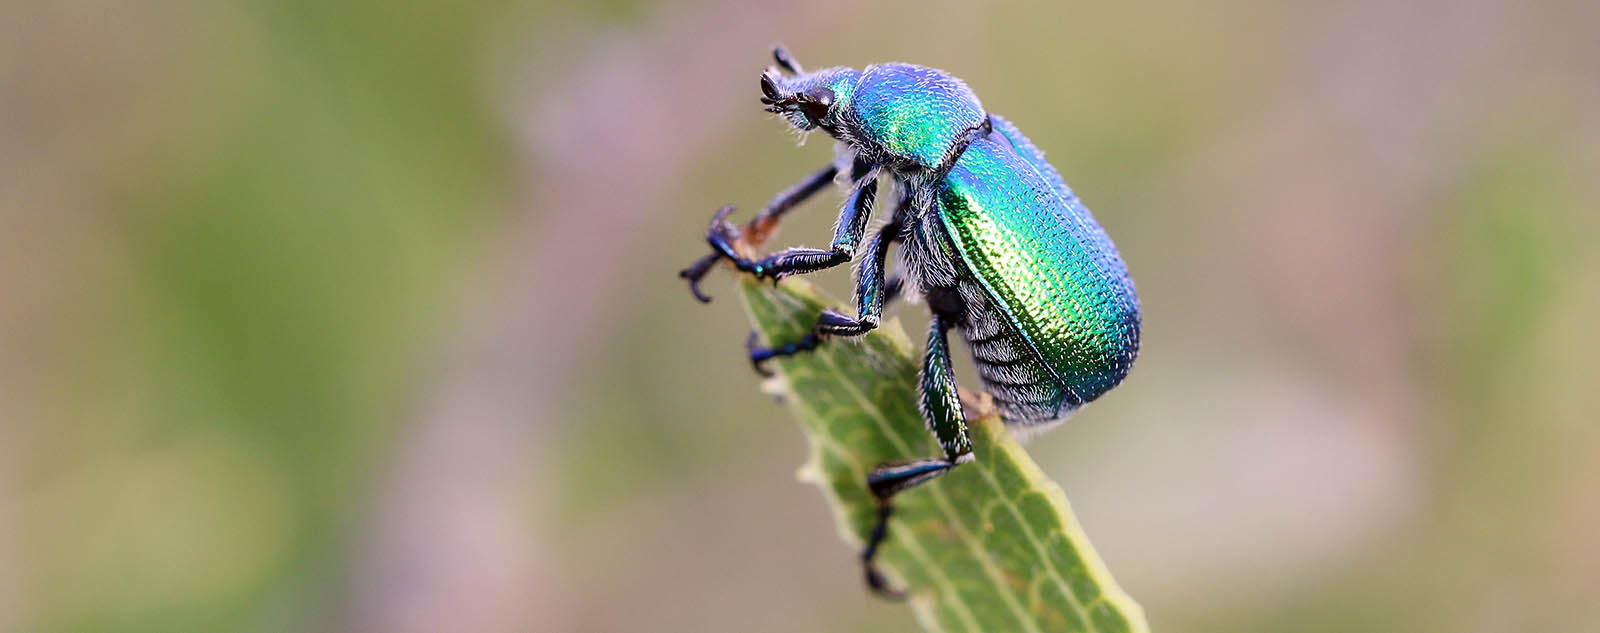 beetle-jewel-lesuer-WA